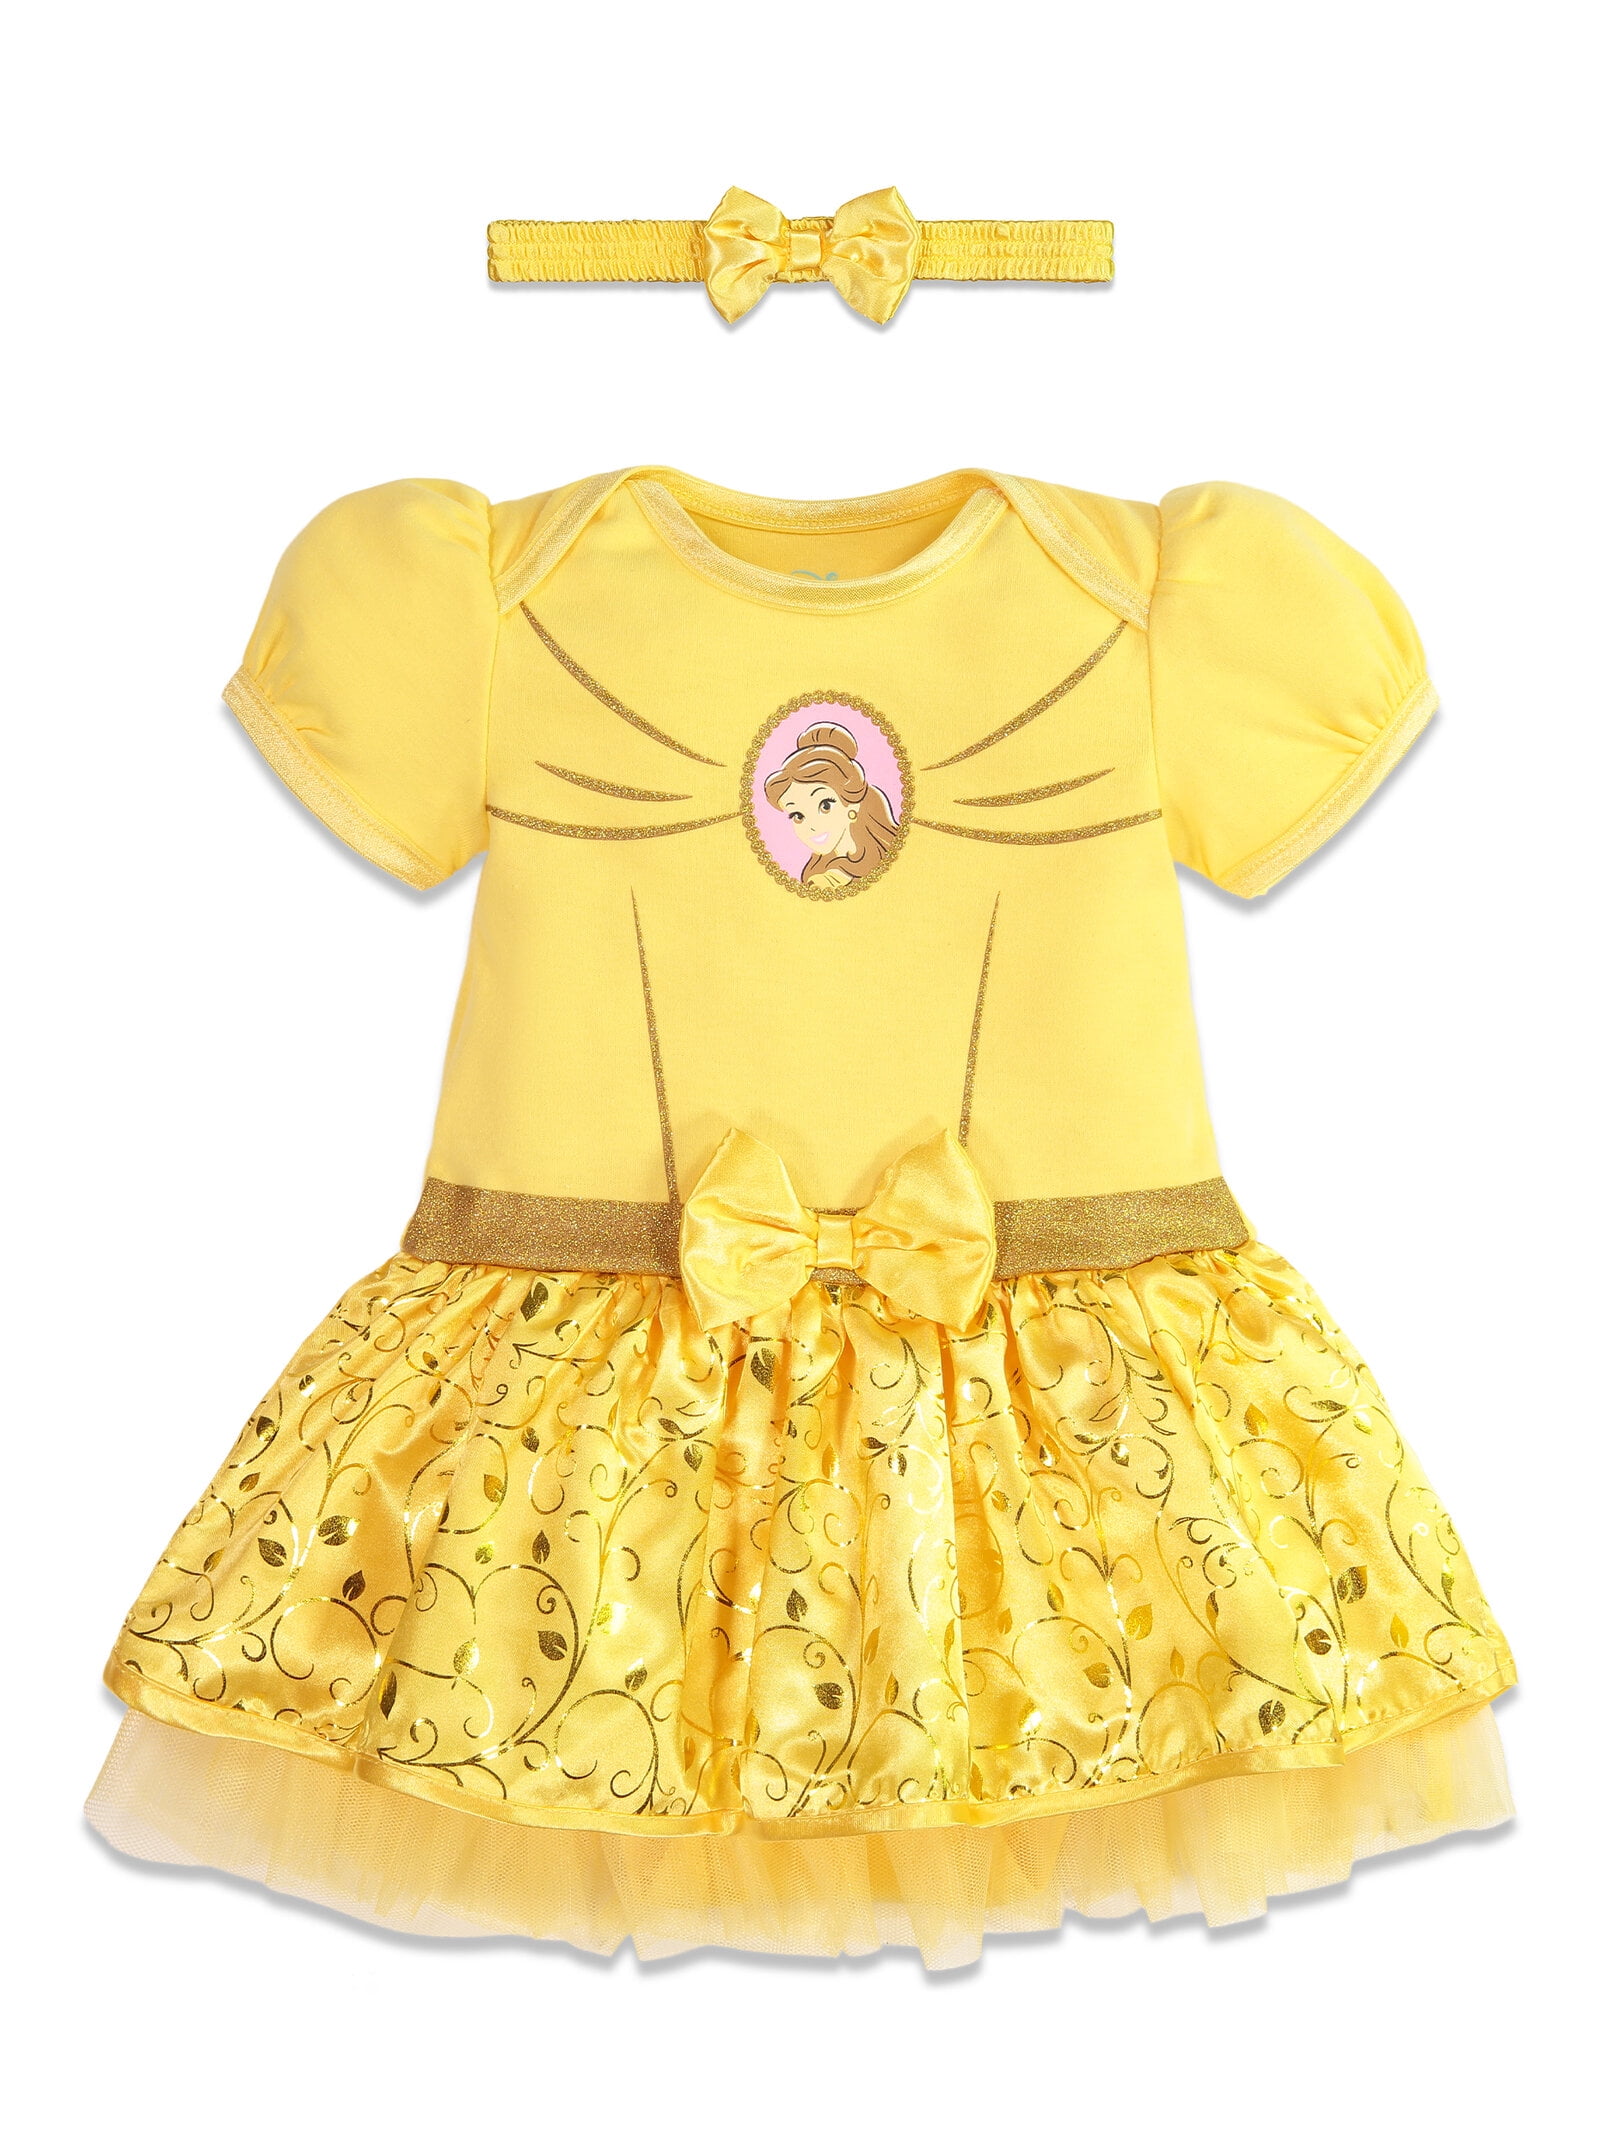 Disney Baby Princess Snow White Infant Costume Shoes Headband 6